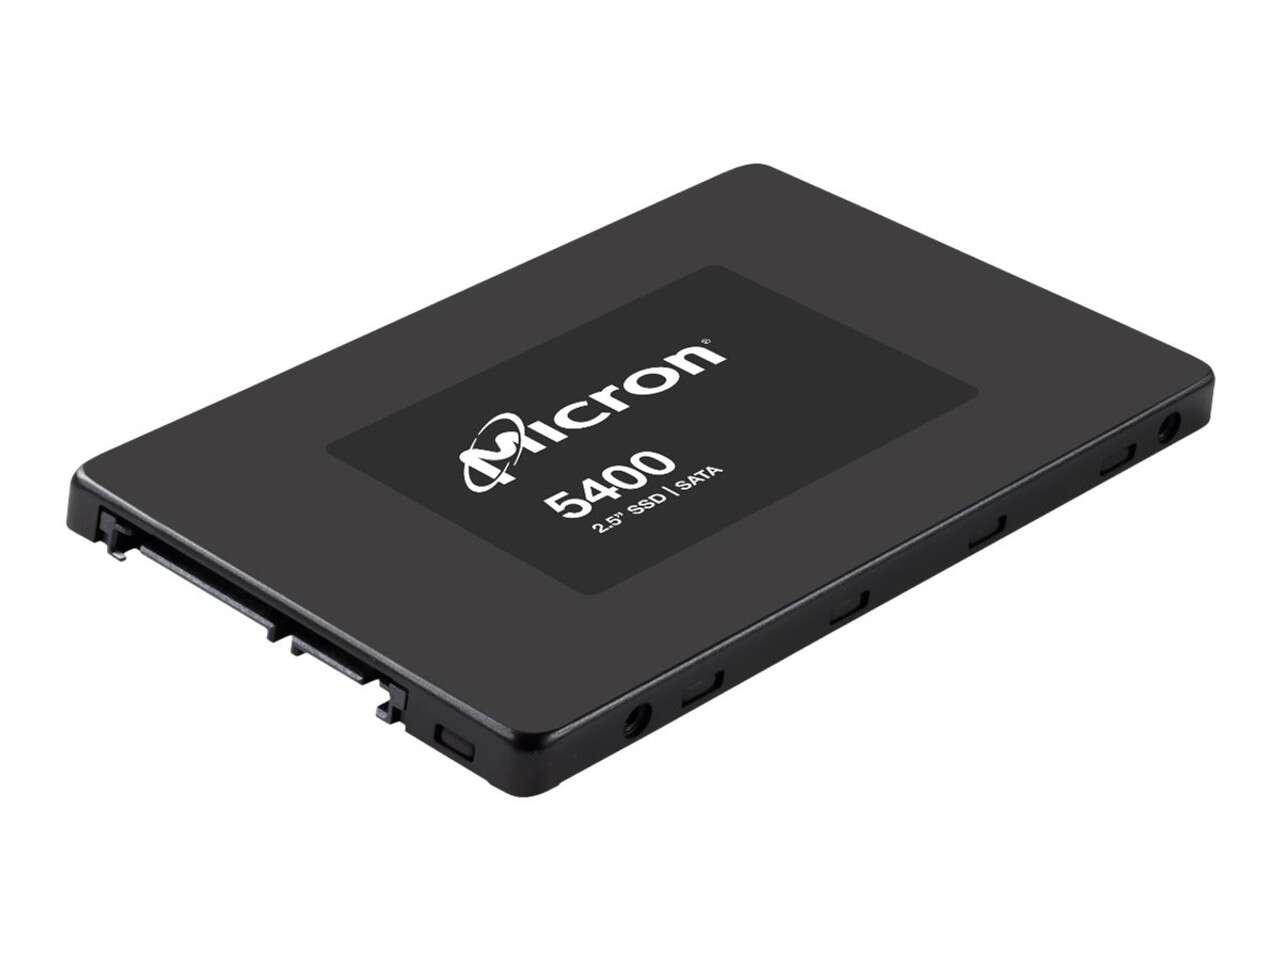 Micron 960gb 5400 max 2.5" sata3 ssd